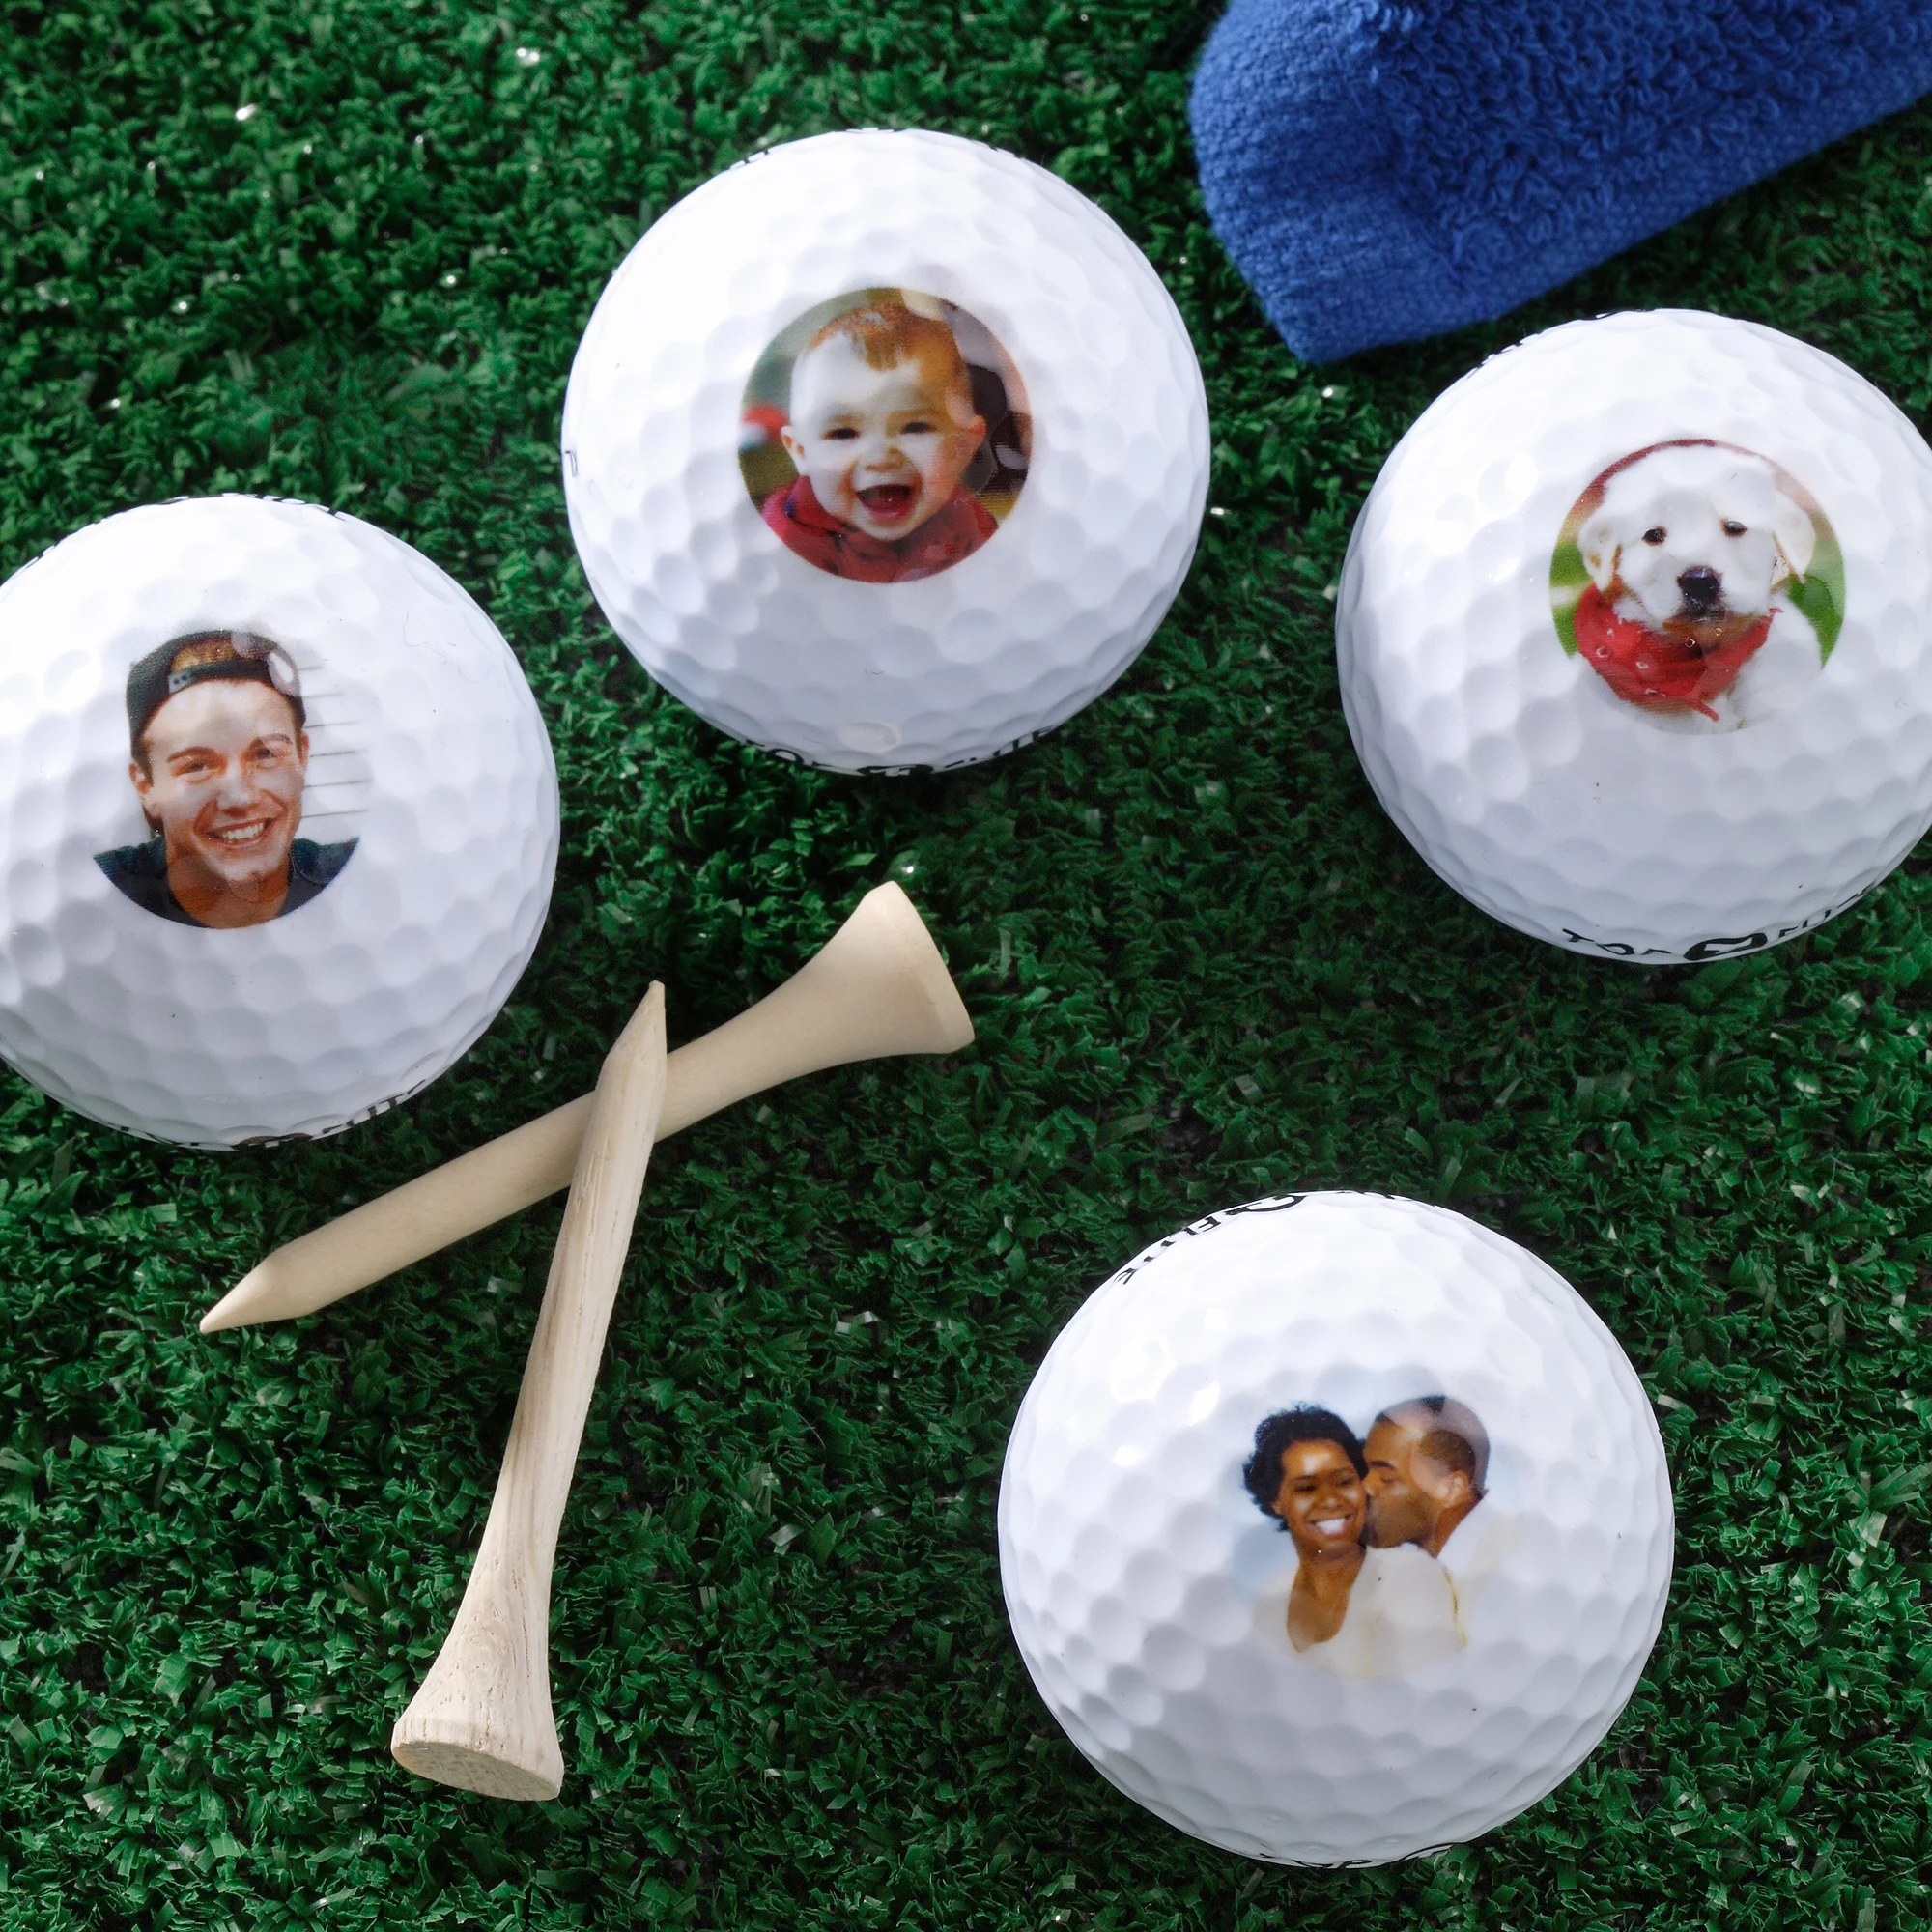 Best Photo Gift 2023: Golf Balls 2023